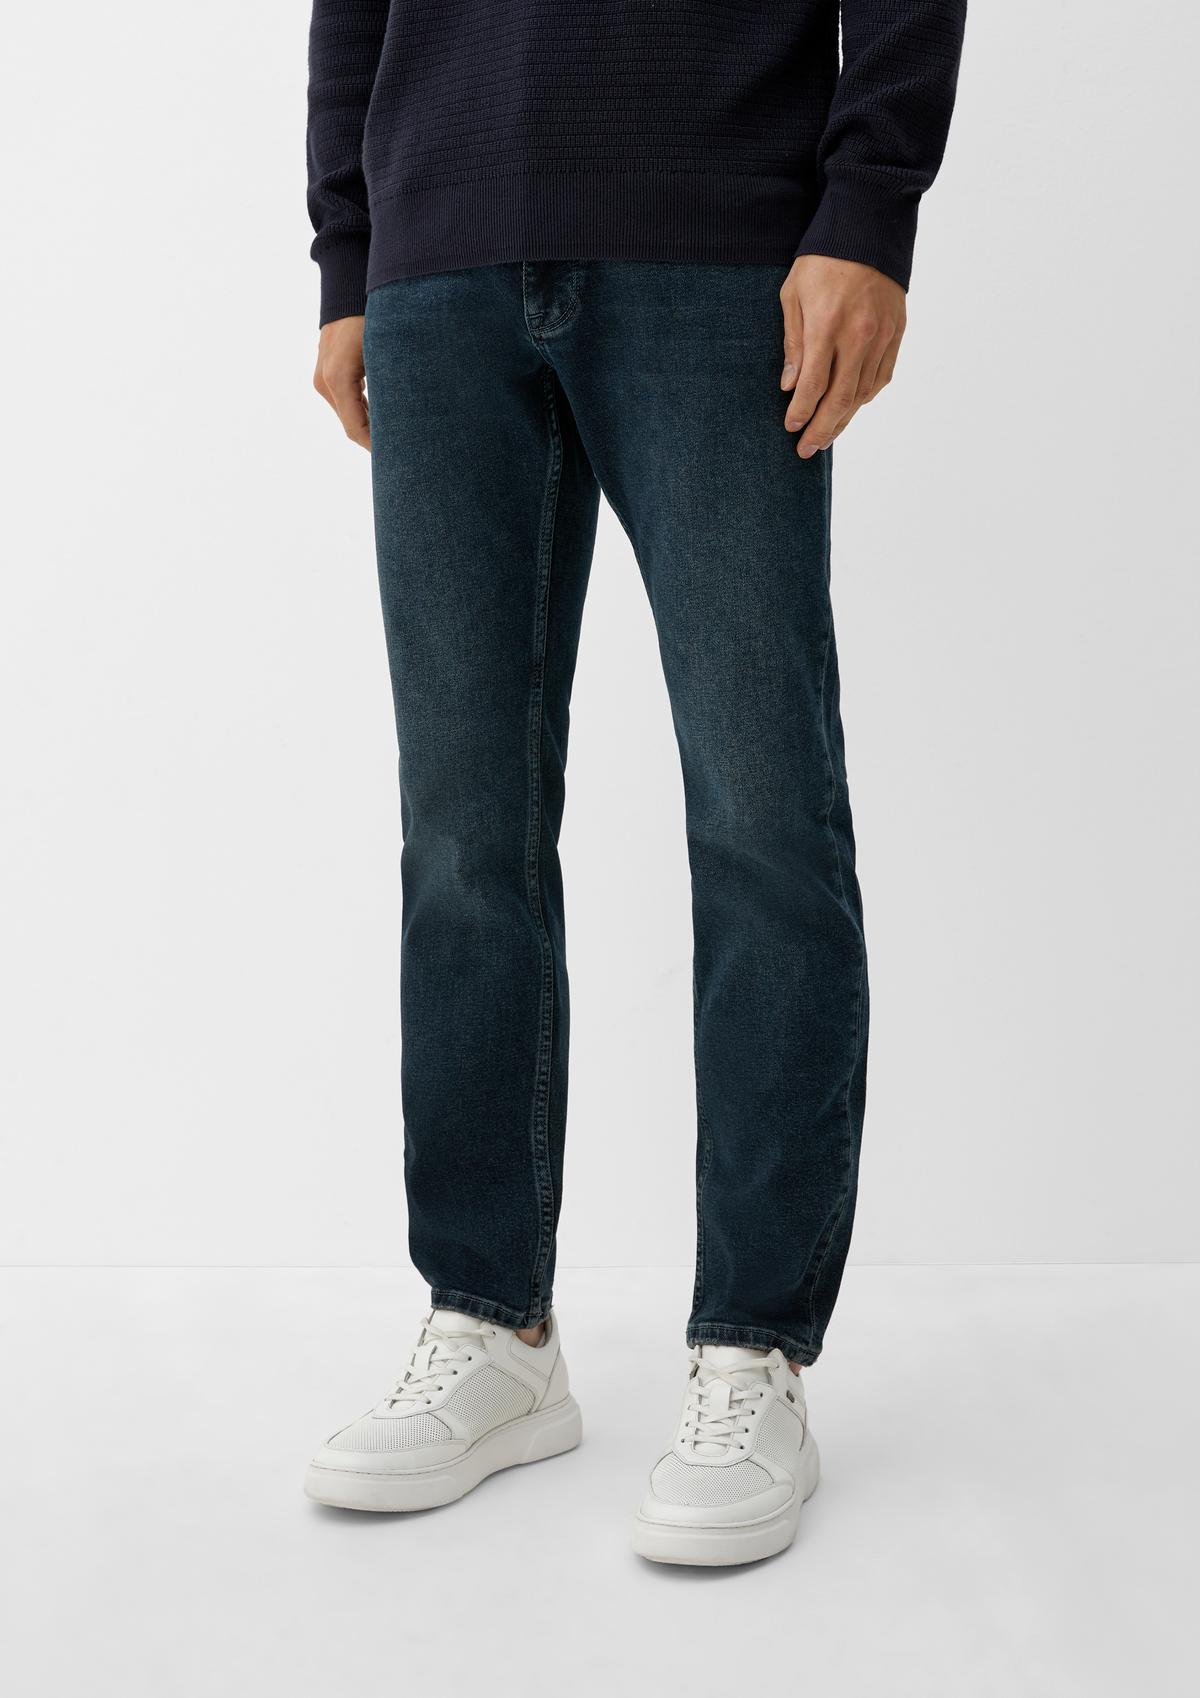 Jeans / regular blue mid leg - rise / fit light / straight